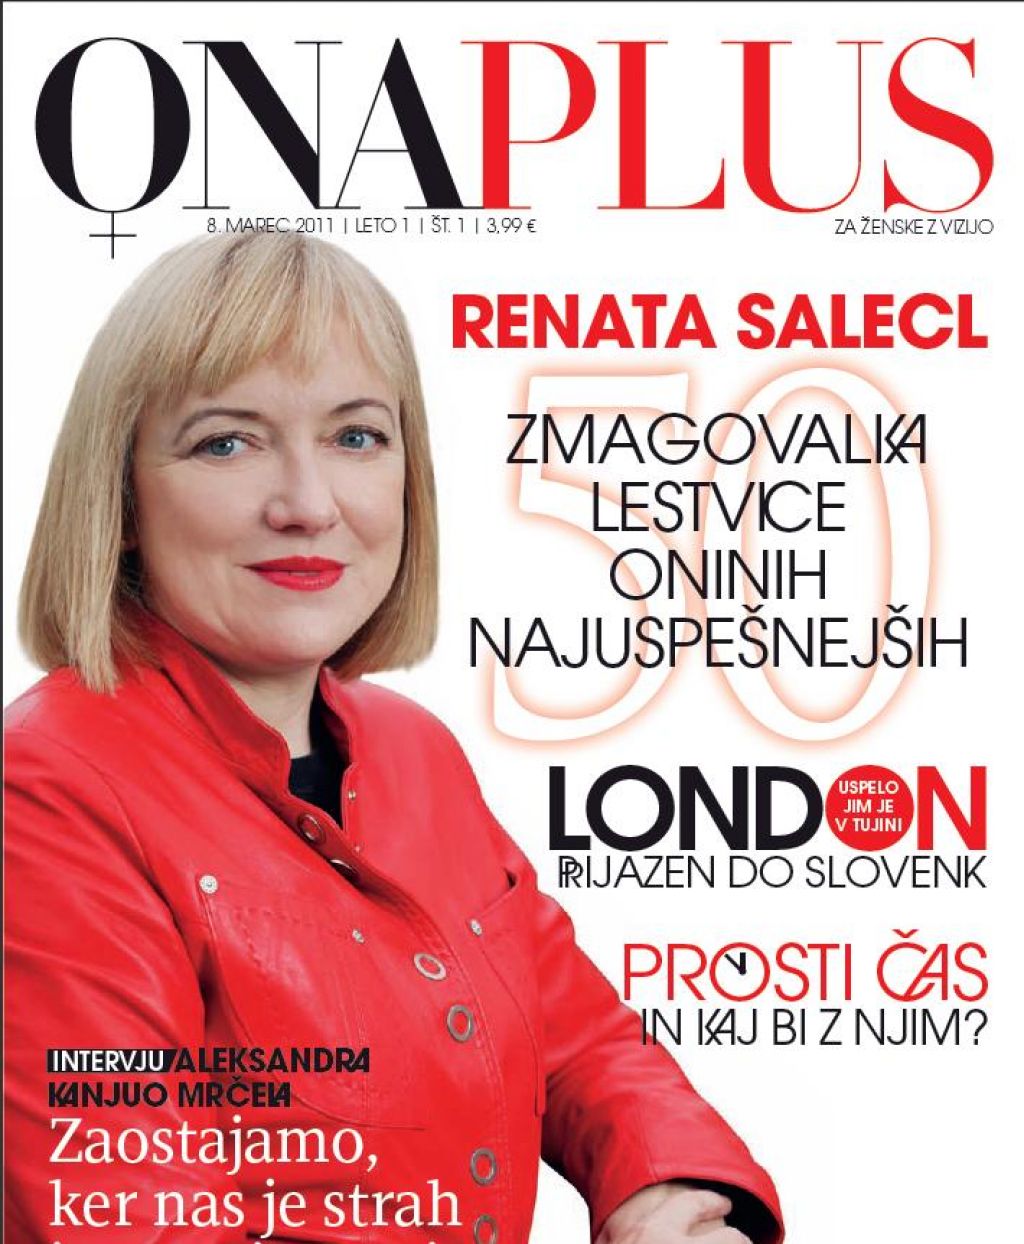 ONA 365 je postala dr. Renata Salecl 